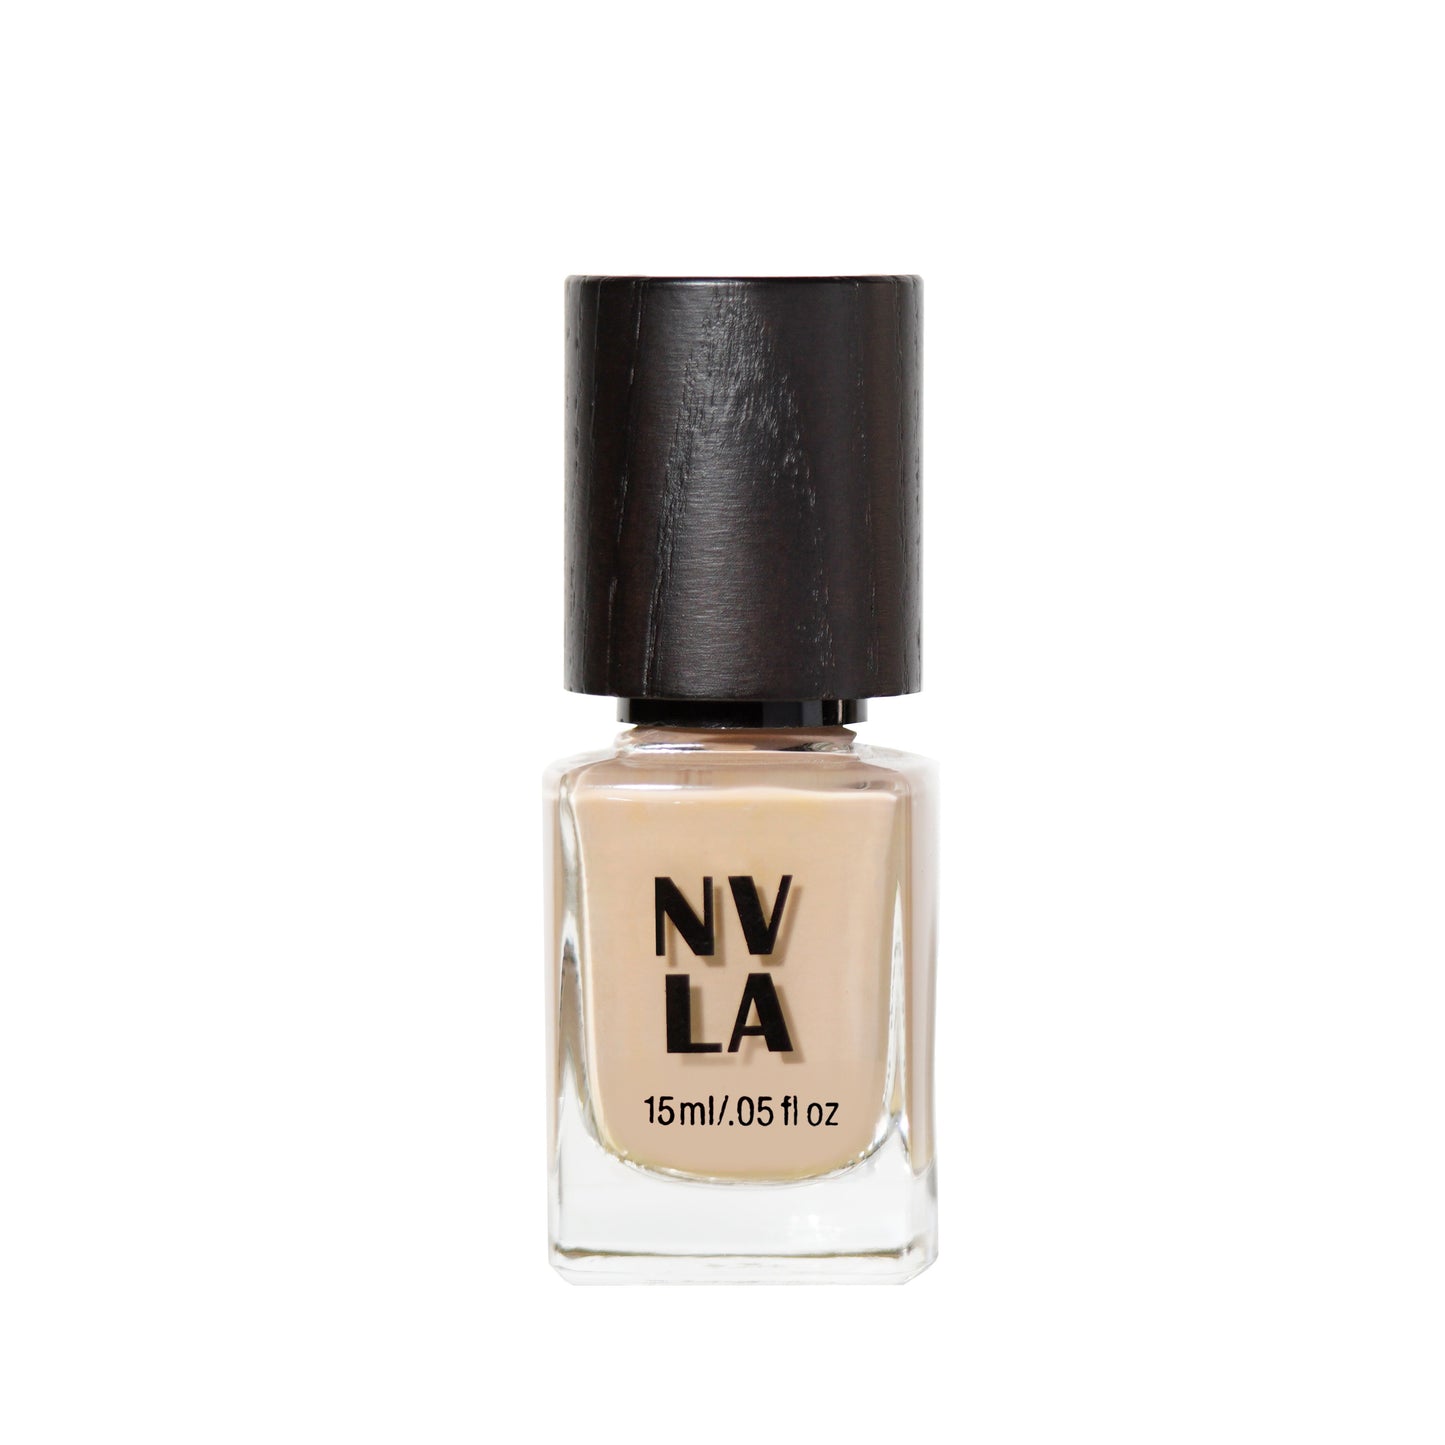 NVLA nail polish Sunset Blvd Nude beige